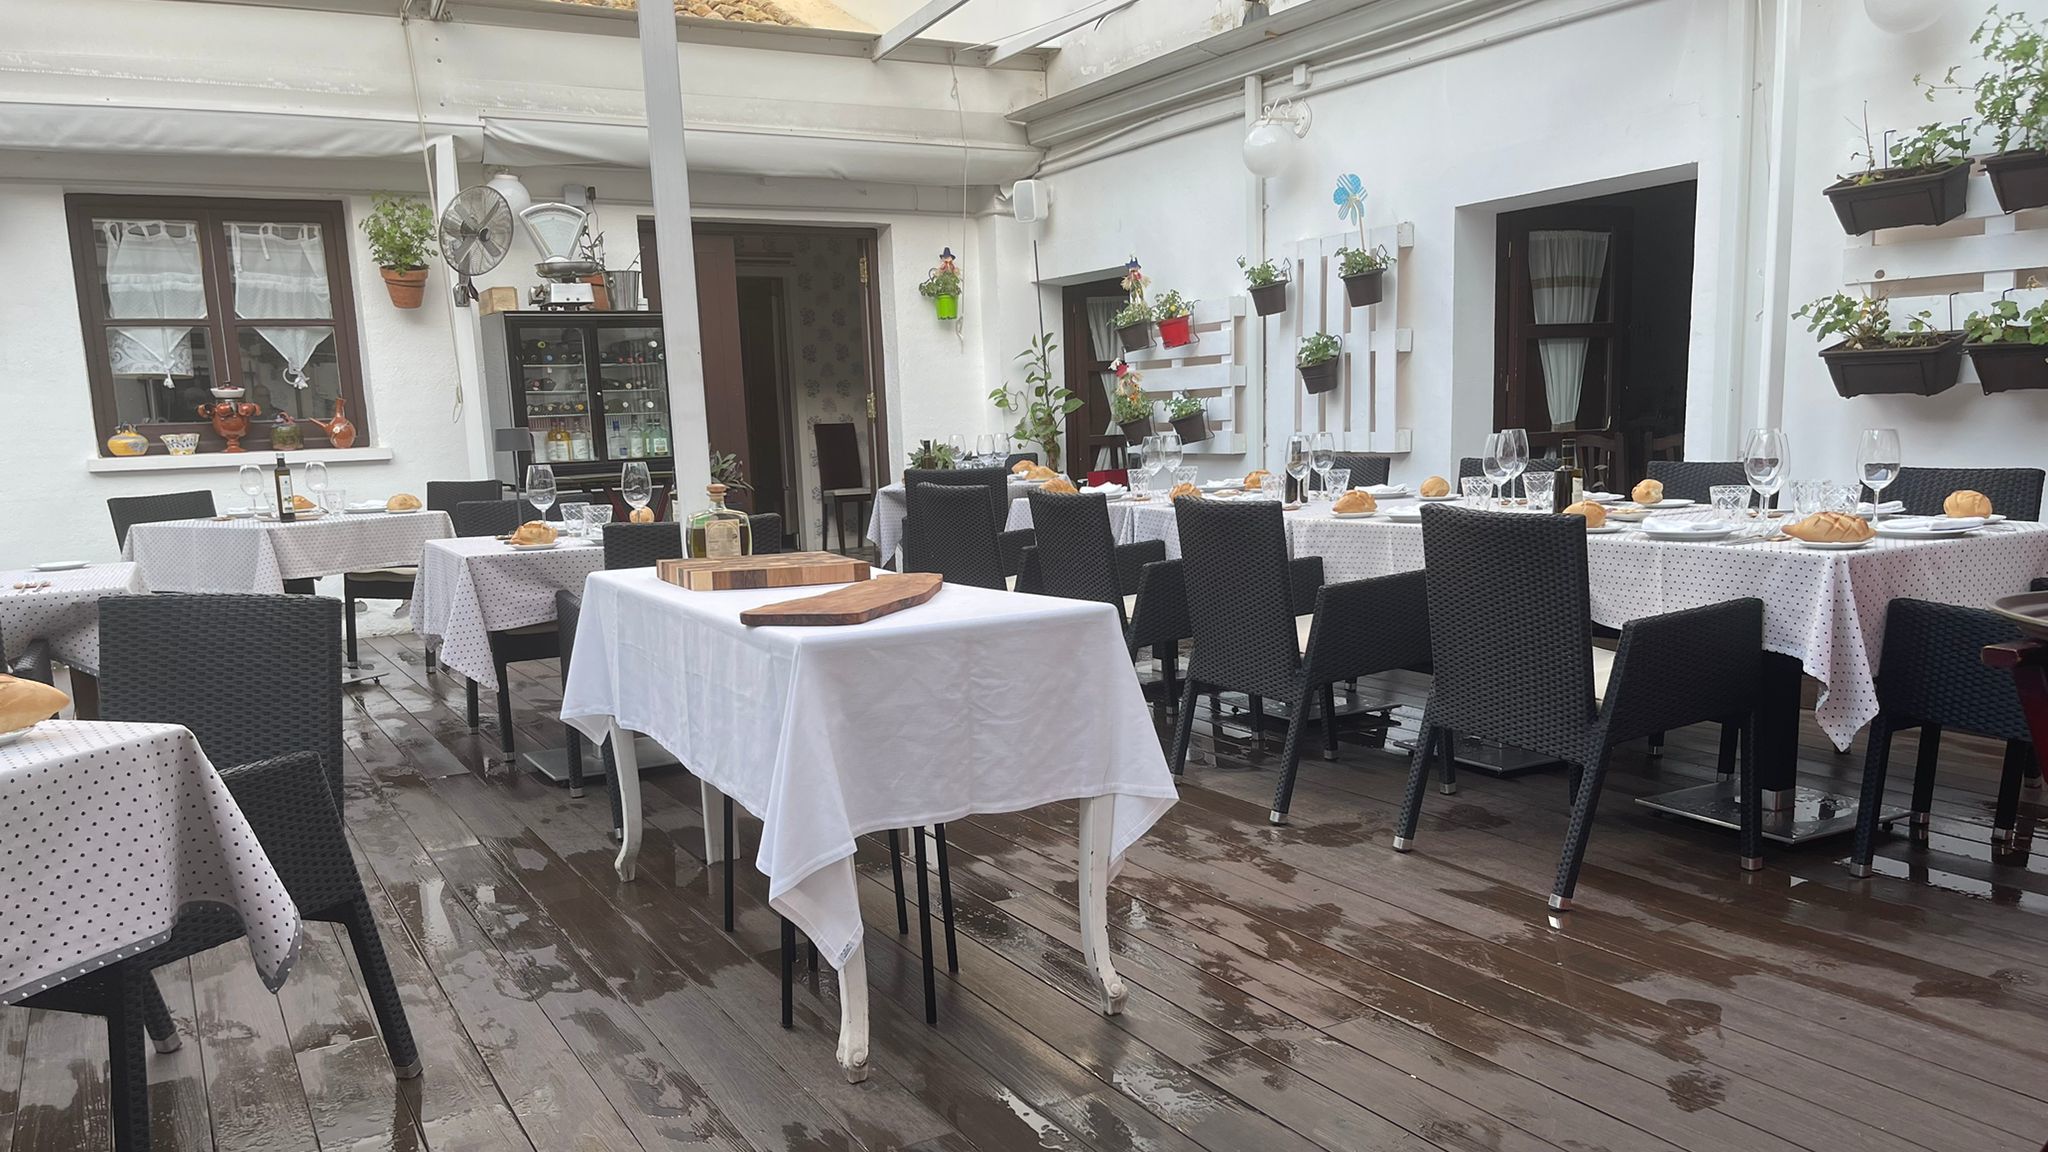 experience authentic traditional cuisine at aguatinta restaurant in aranjuez